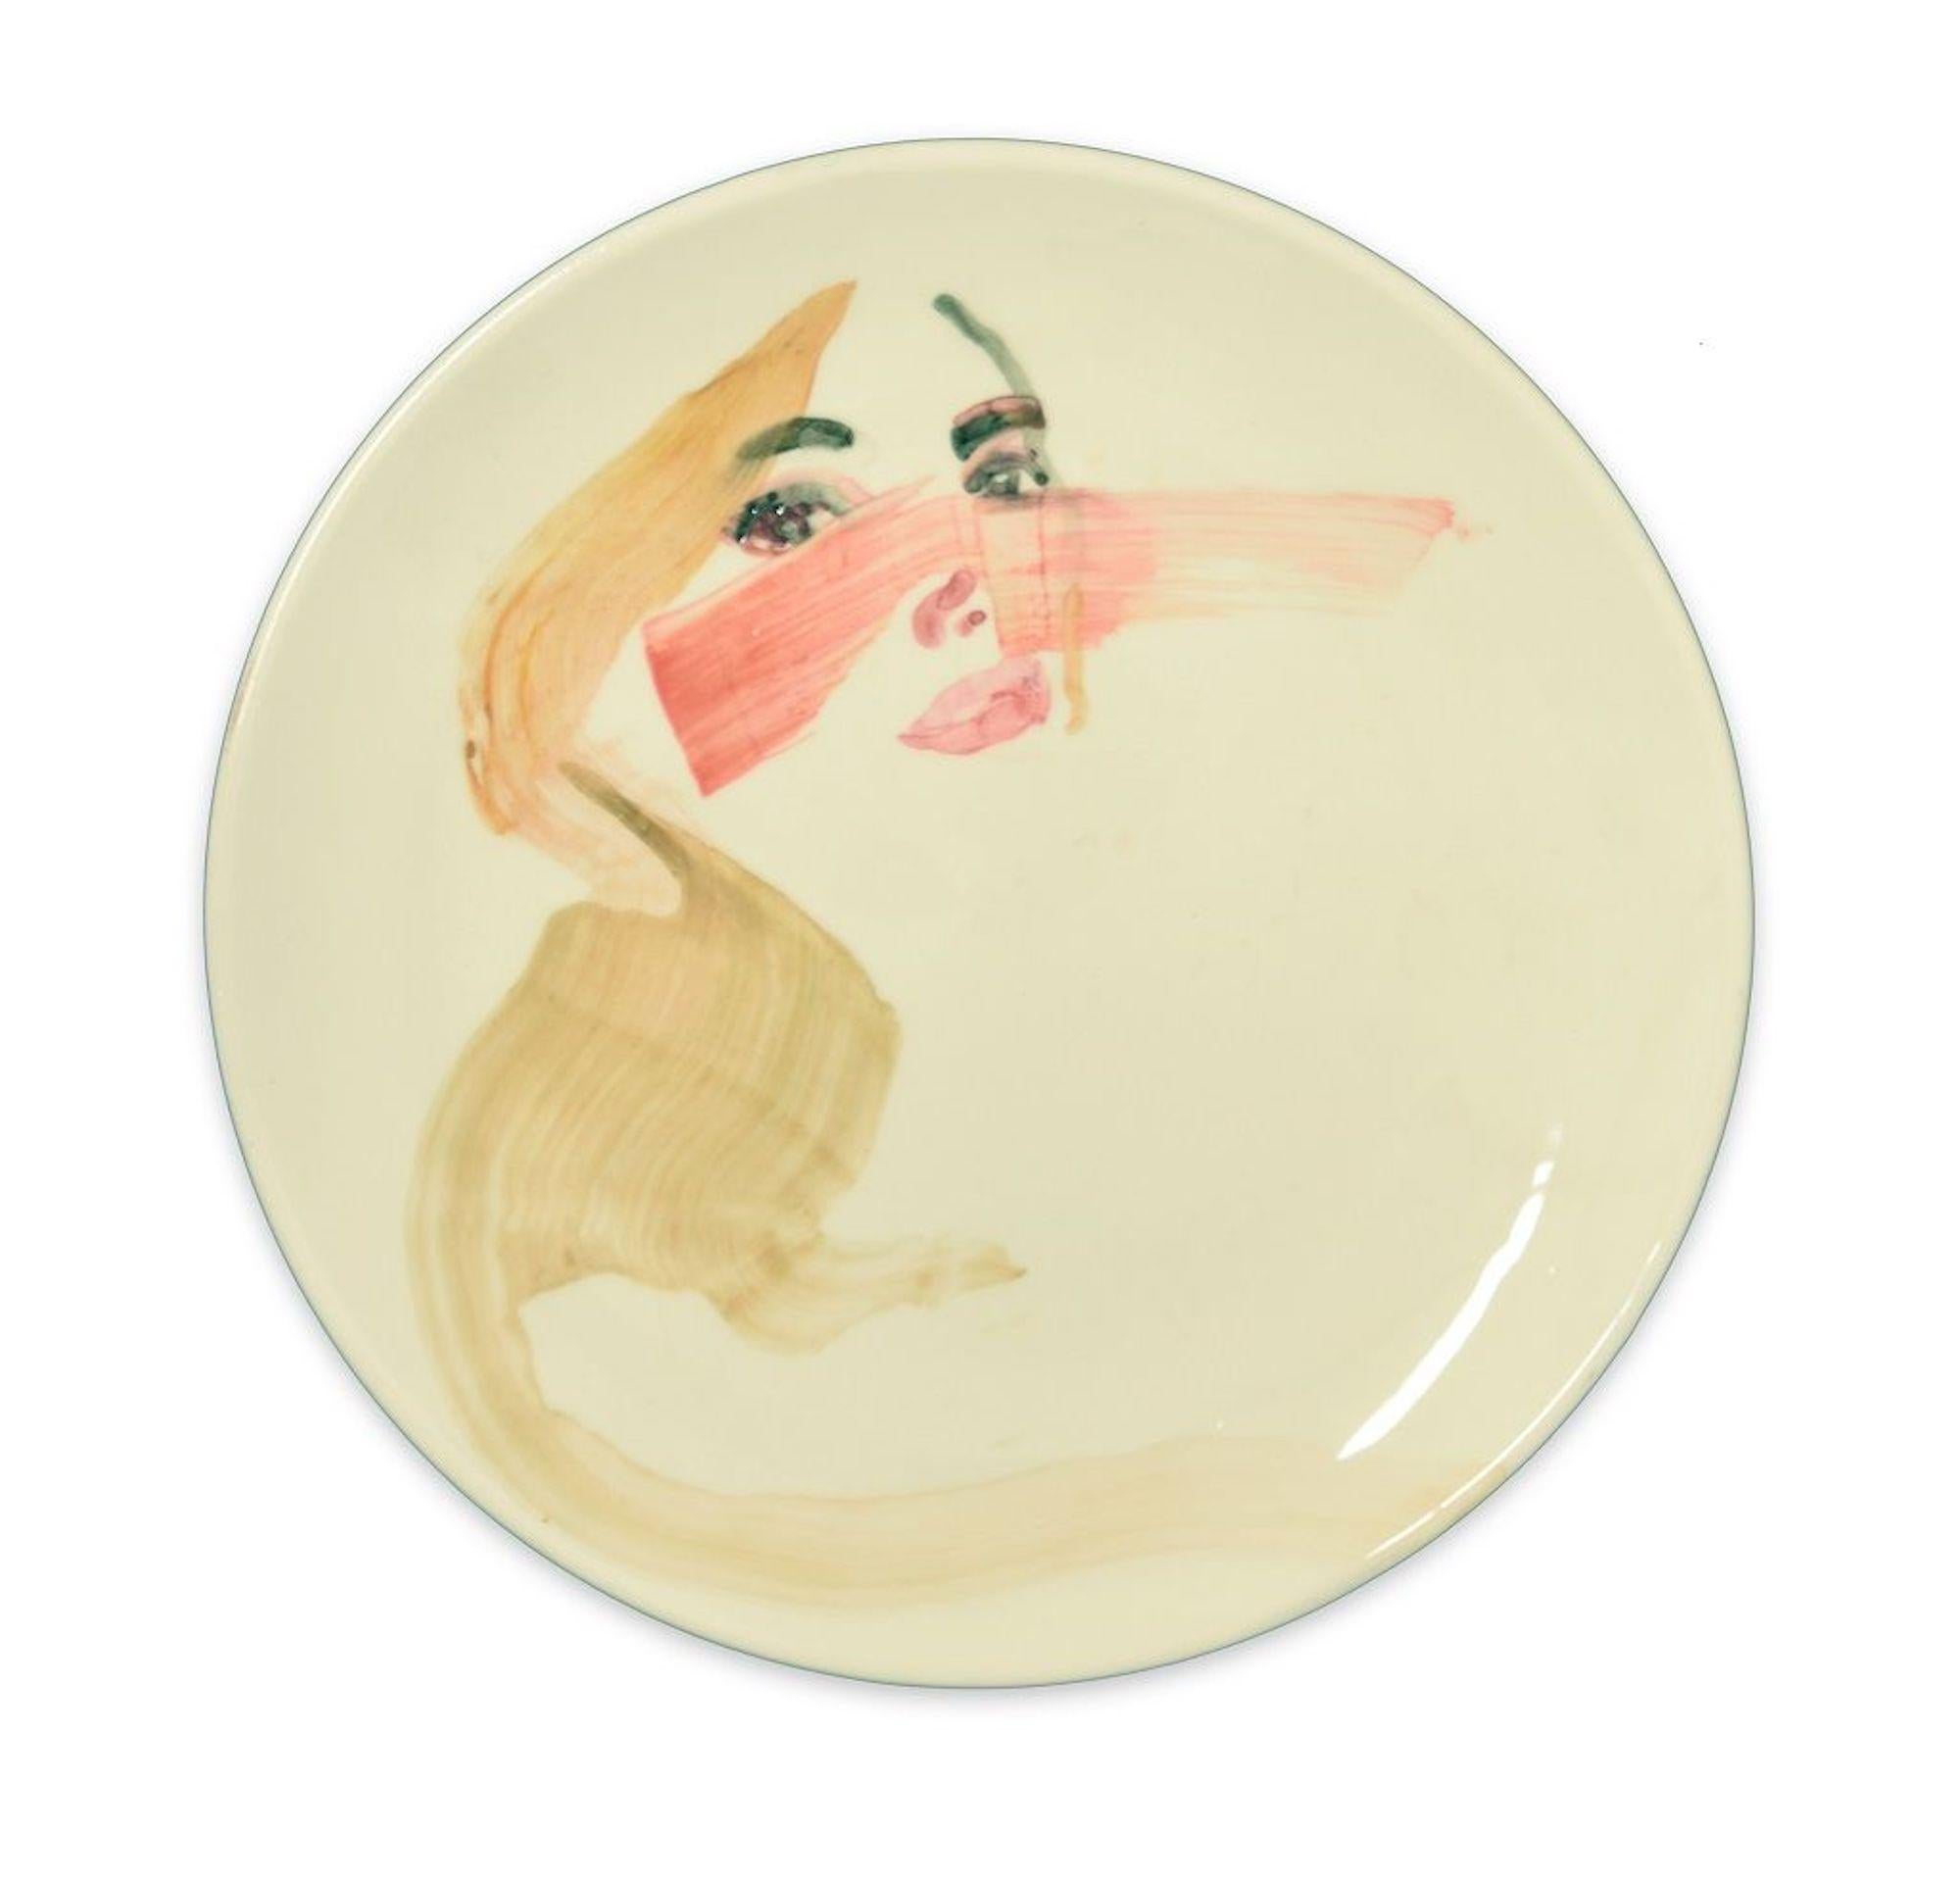 Lady - Original  Hand-made Flat Ceramic Dish by A. Kurakina - 2019